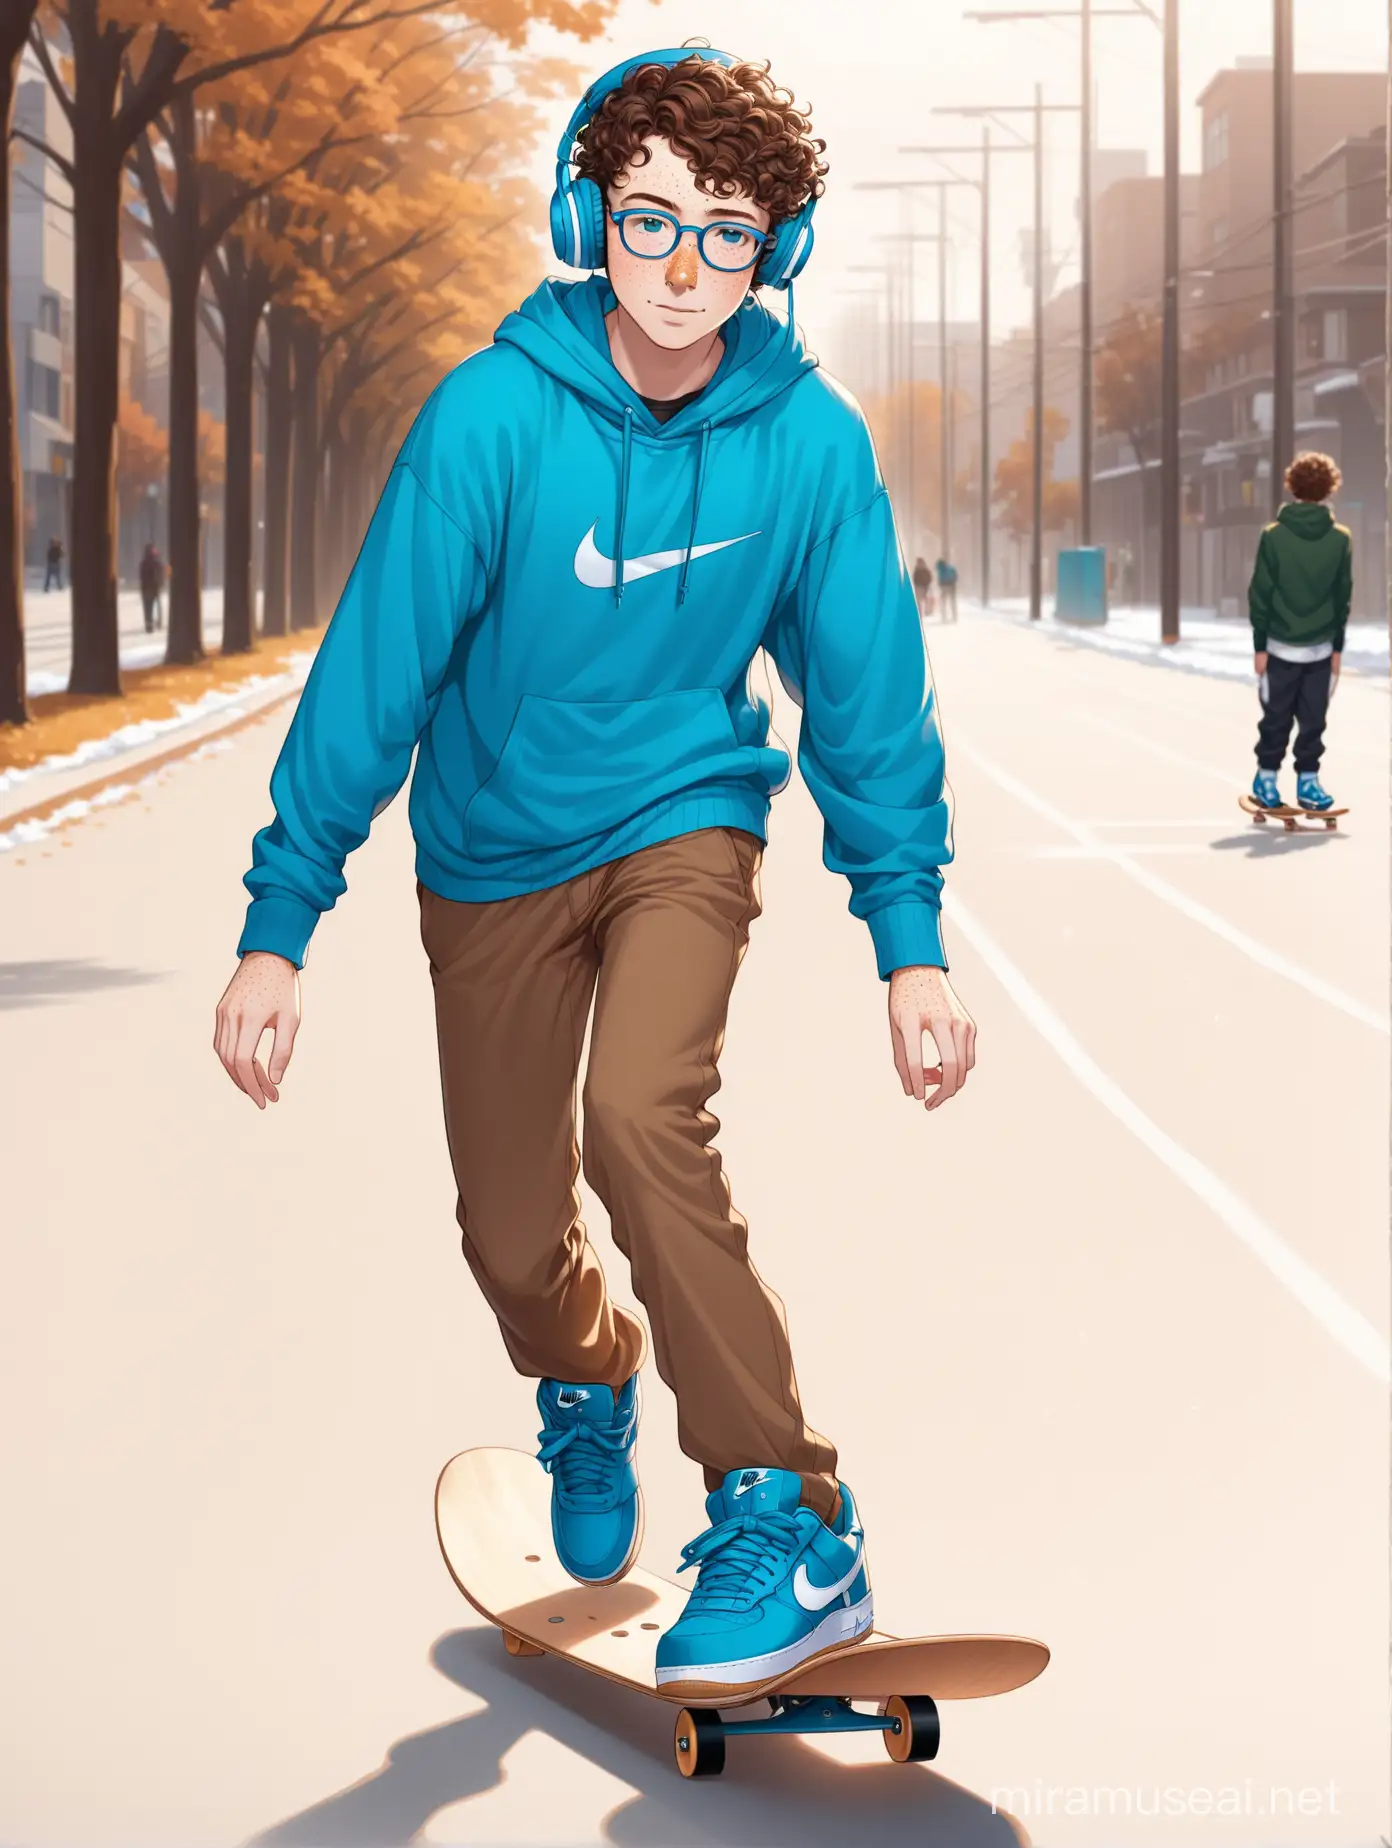 Teenage Boy Skating on Wooden Sled in Urban Setting